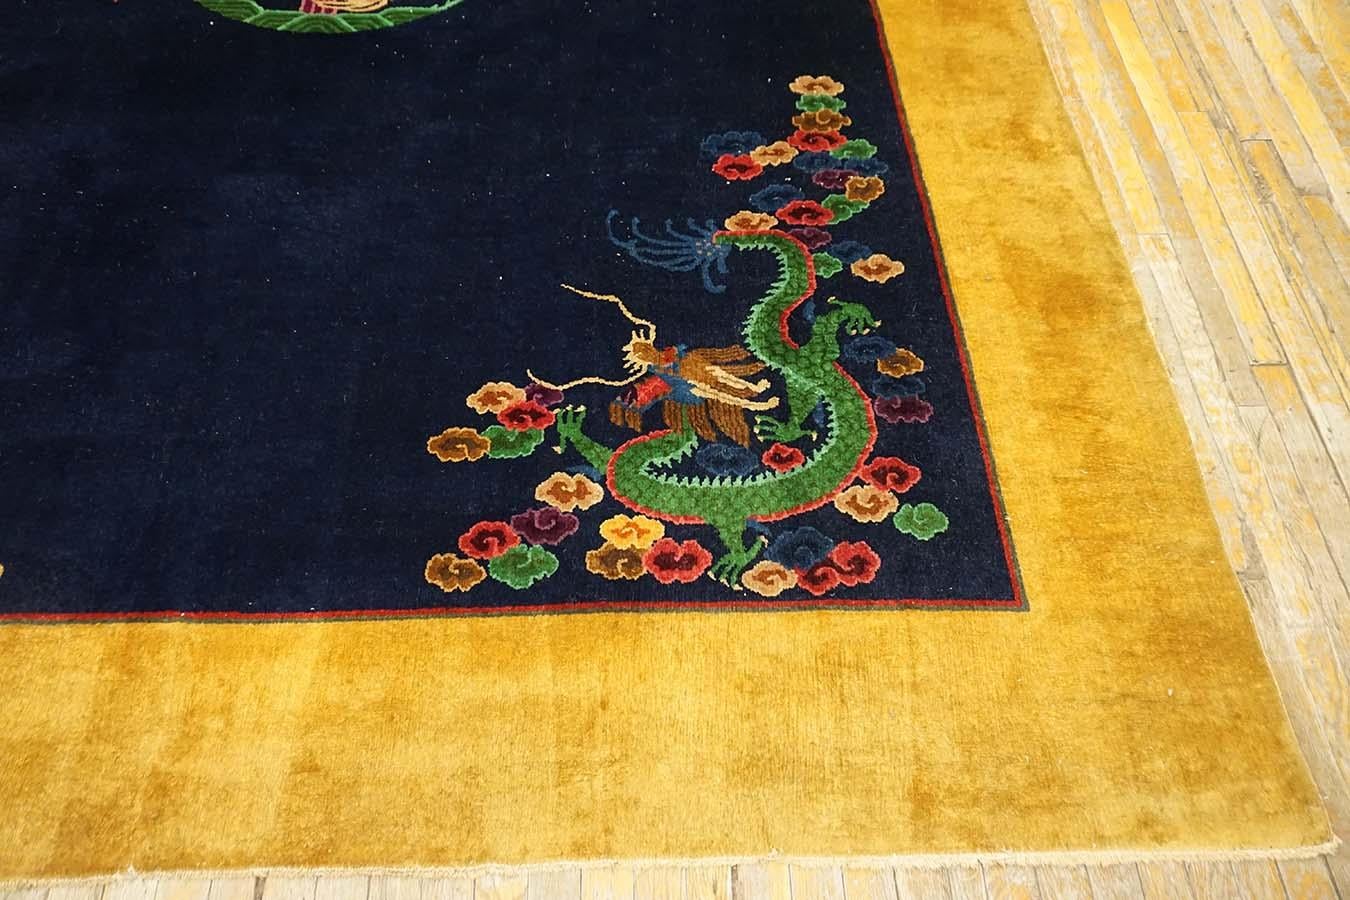 1920s Chinese Art Deco Carpet by Nichols Workshop (8'10'' x 11'6'' - 270 x 350) For Sale 4